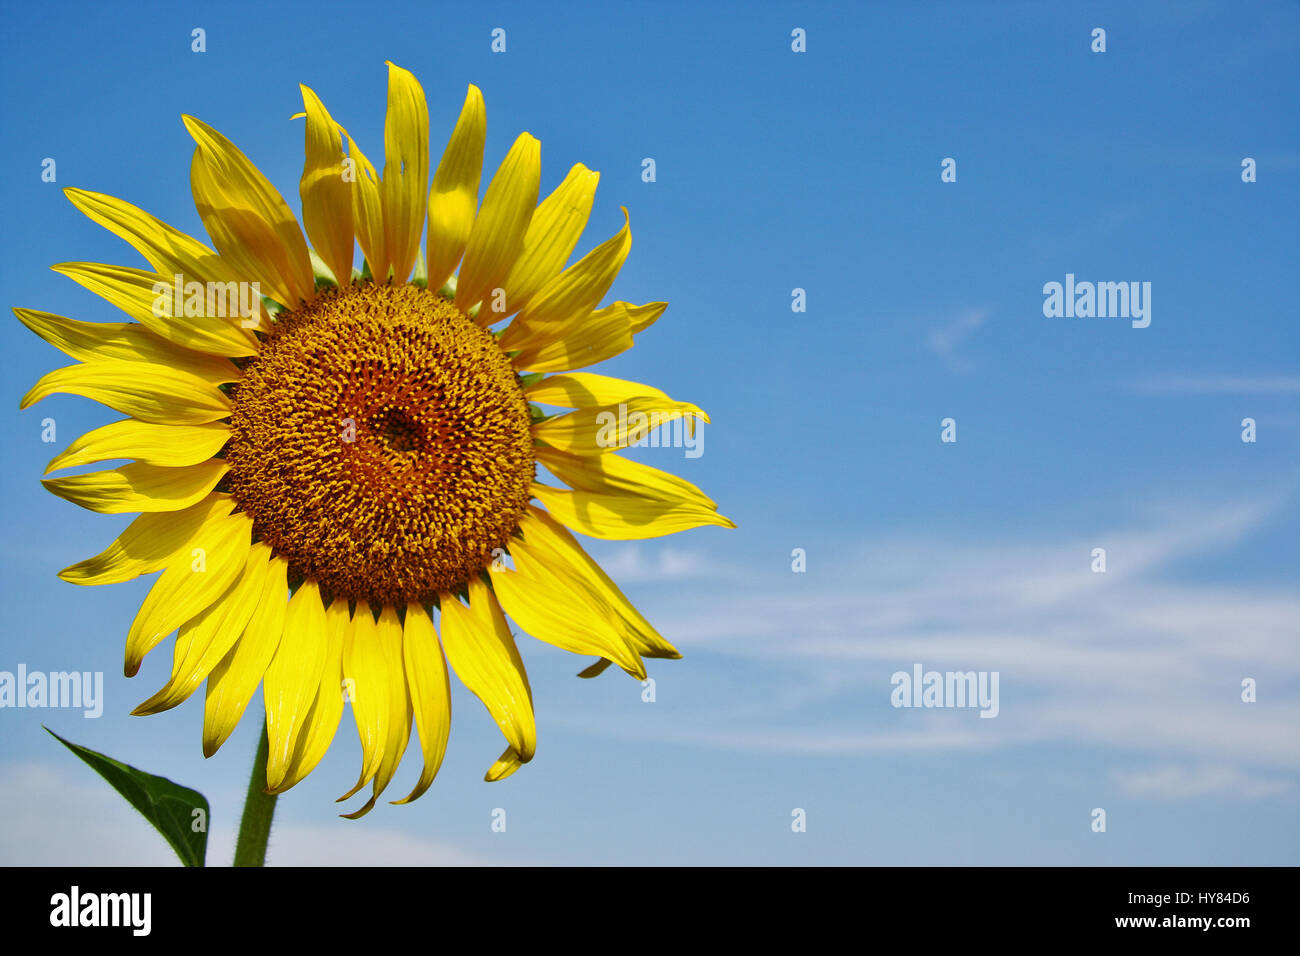 Grandes girasoles fotografías e imágenes de alta resolución - Alamy